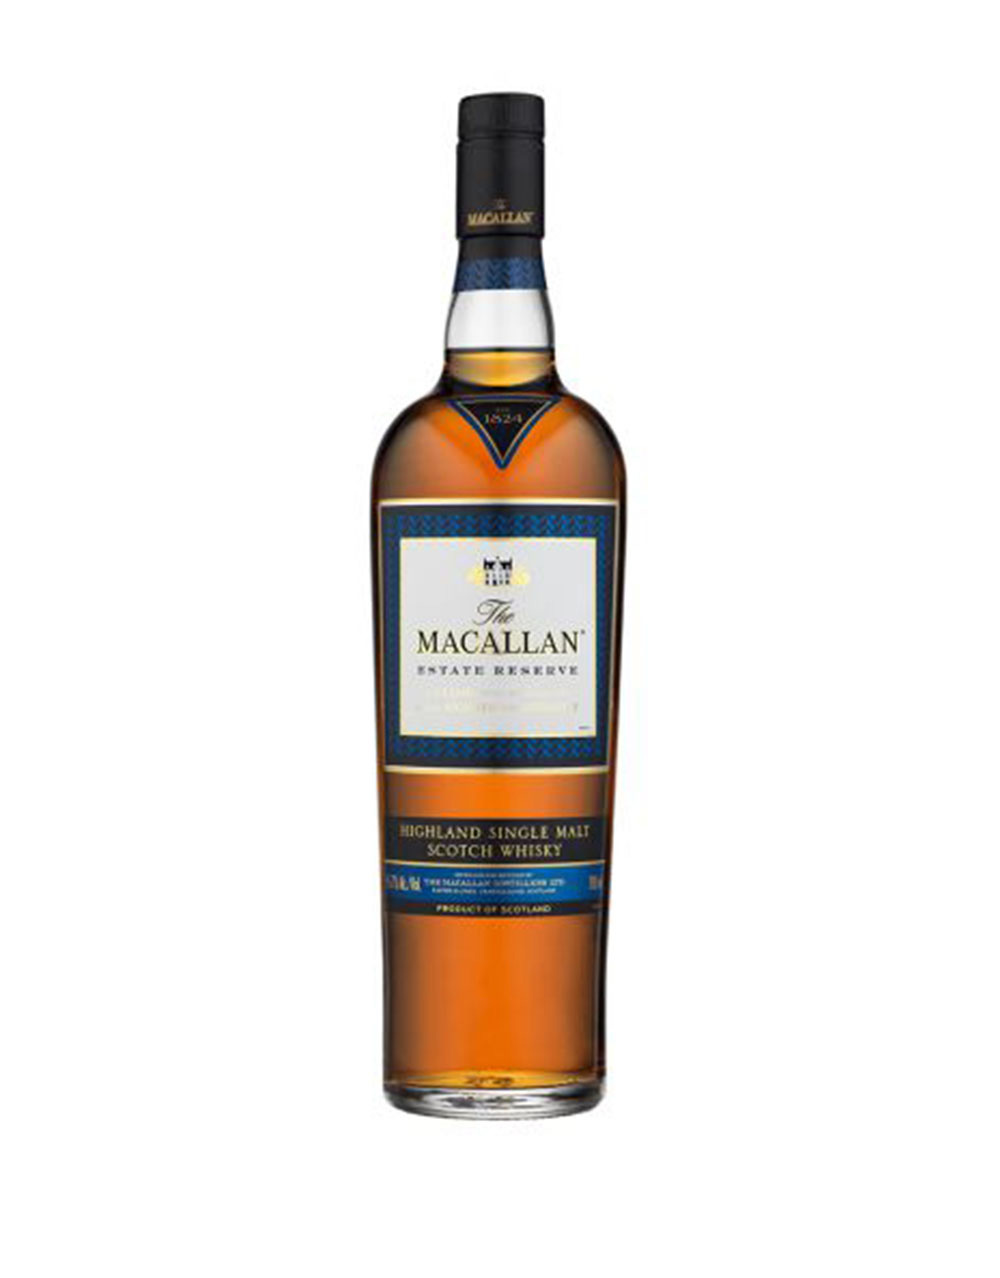 The Macallan Estate Reserve Single Malt Scotch Whisky